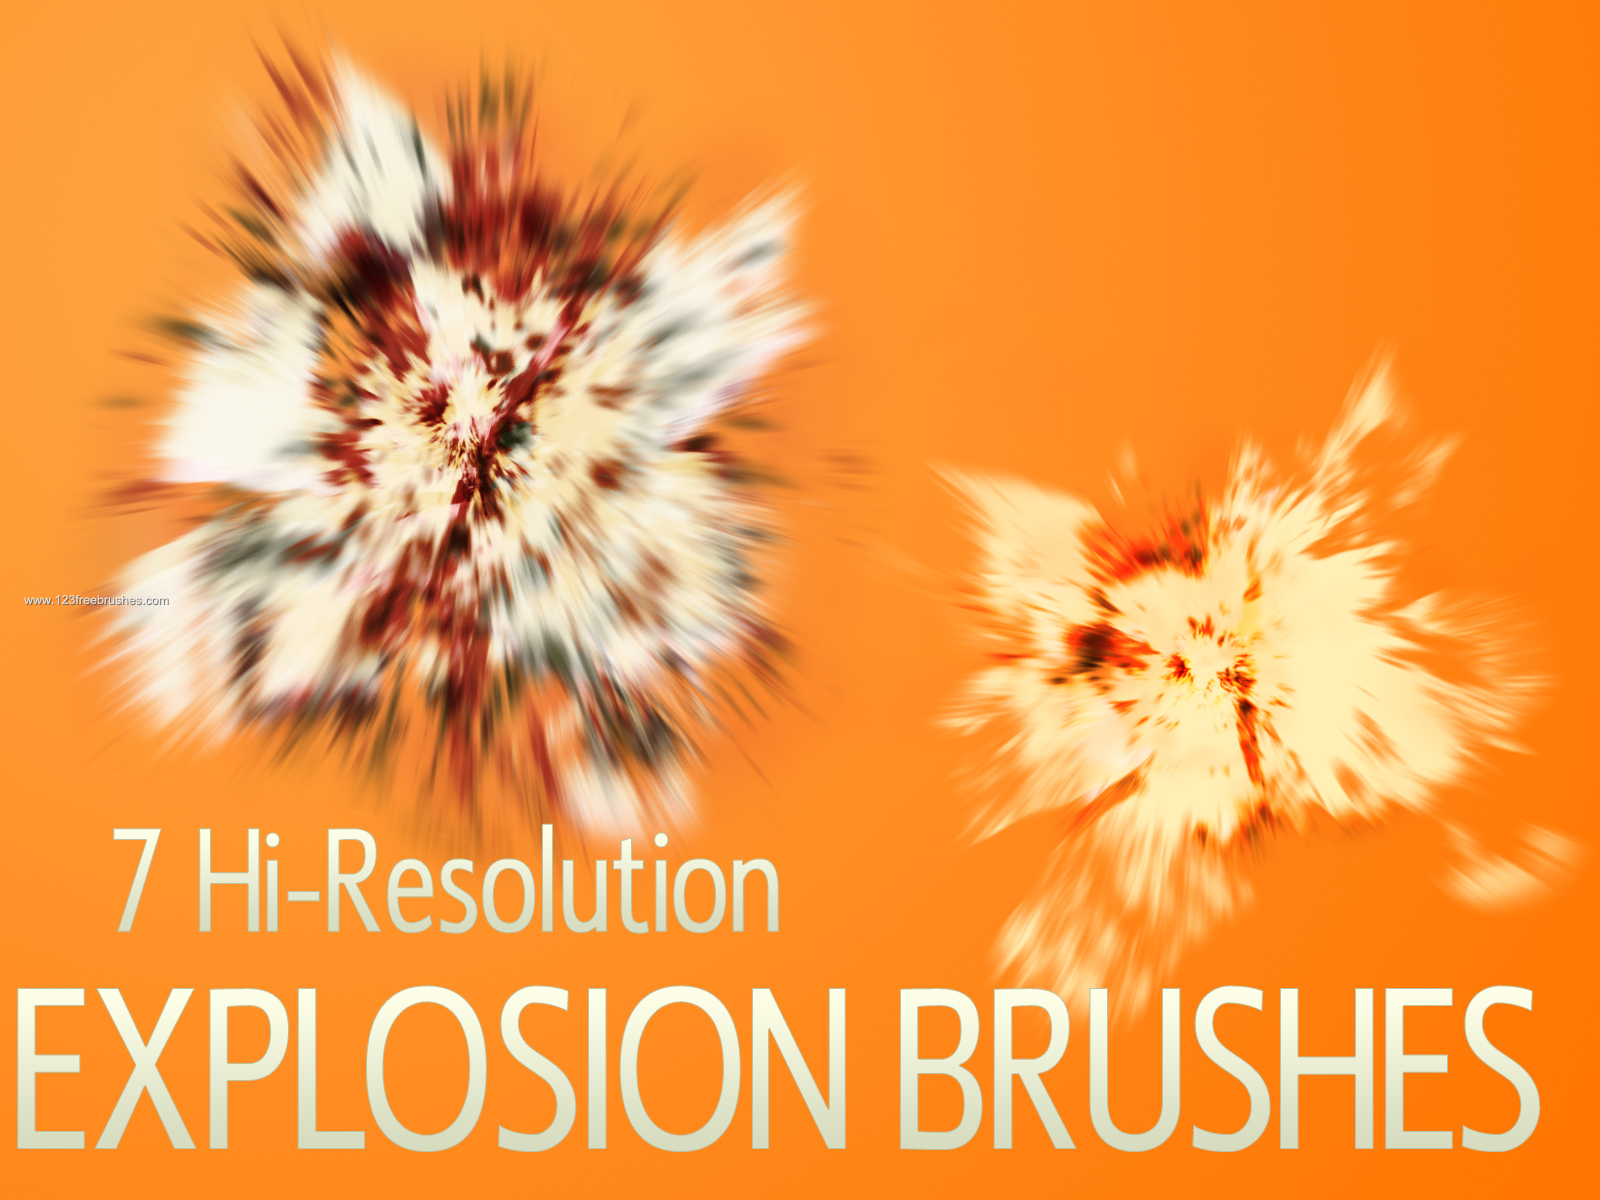 Hi-Res Explosion